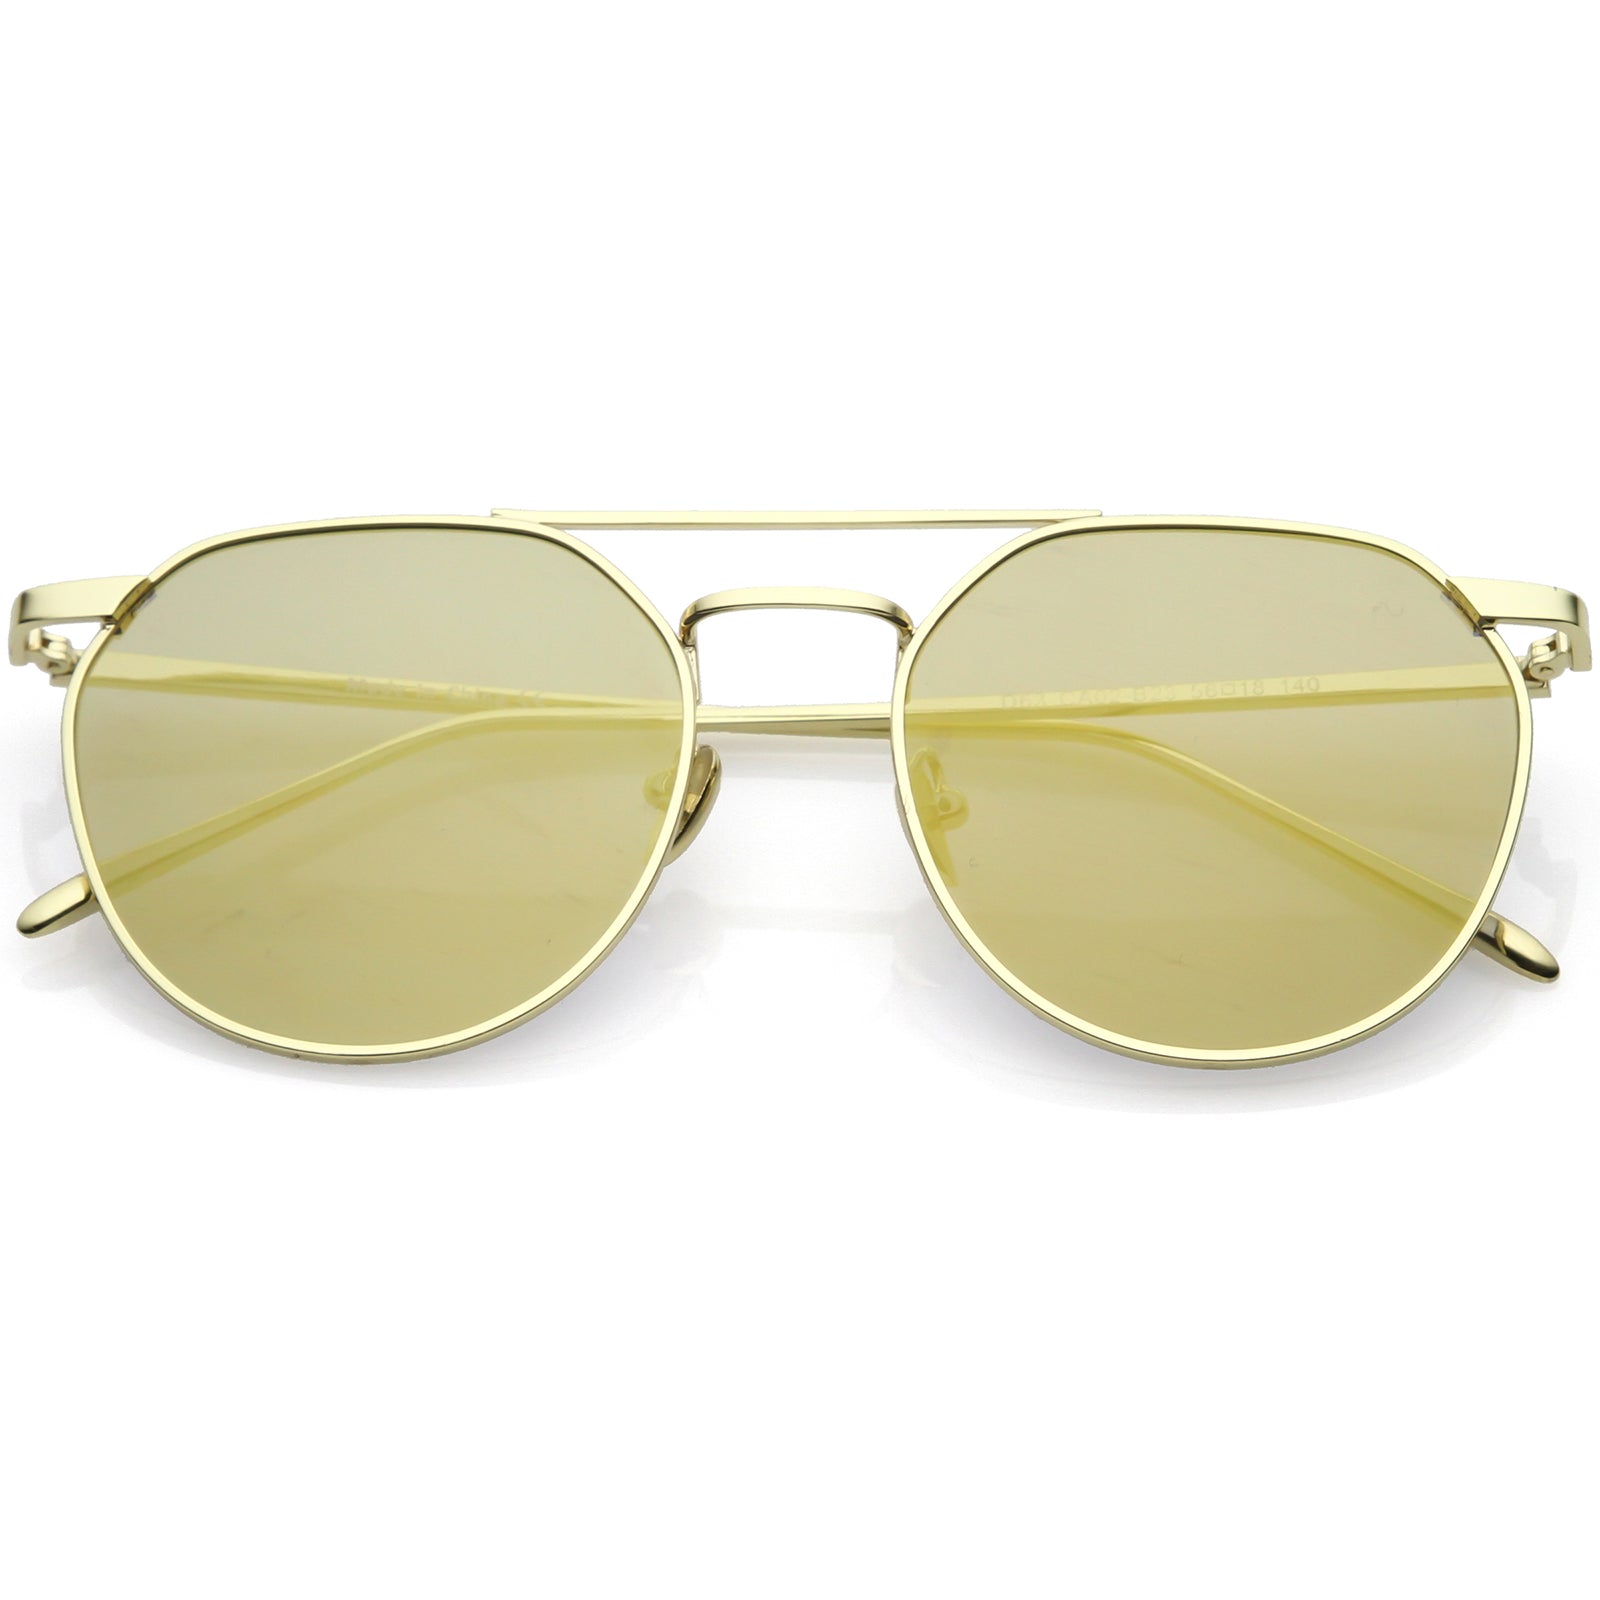 Aviator frame sunglasses in gold-toned metal